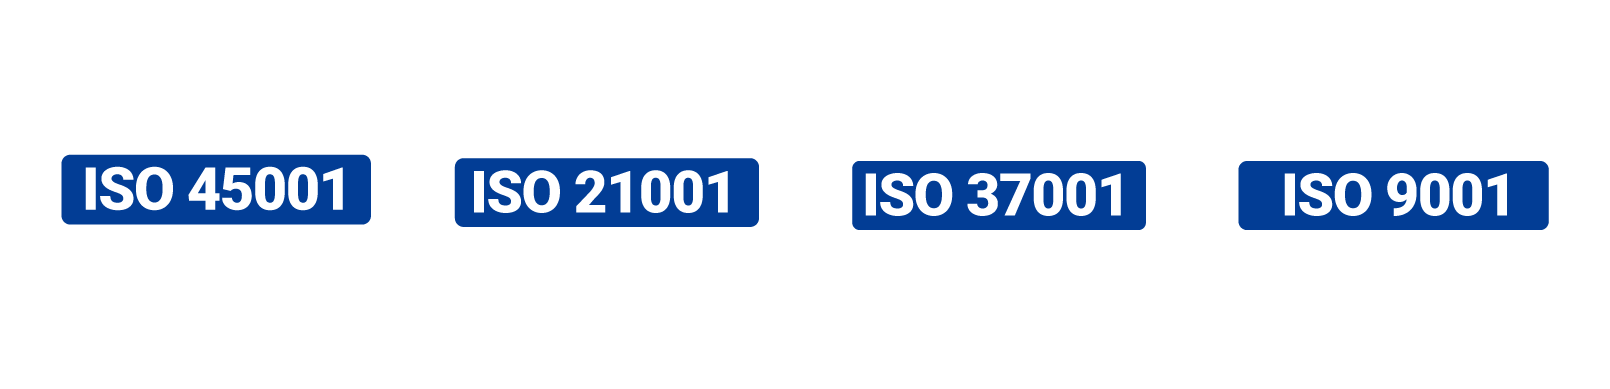 Normas ISO 45001, ISO 14001, ISO 9001, ISO 14001